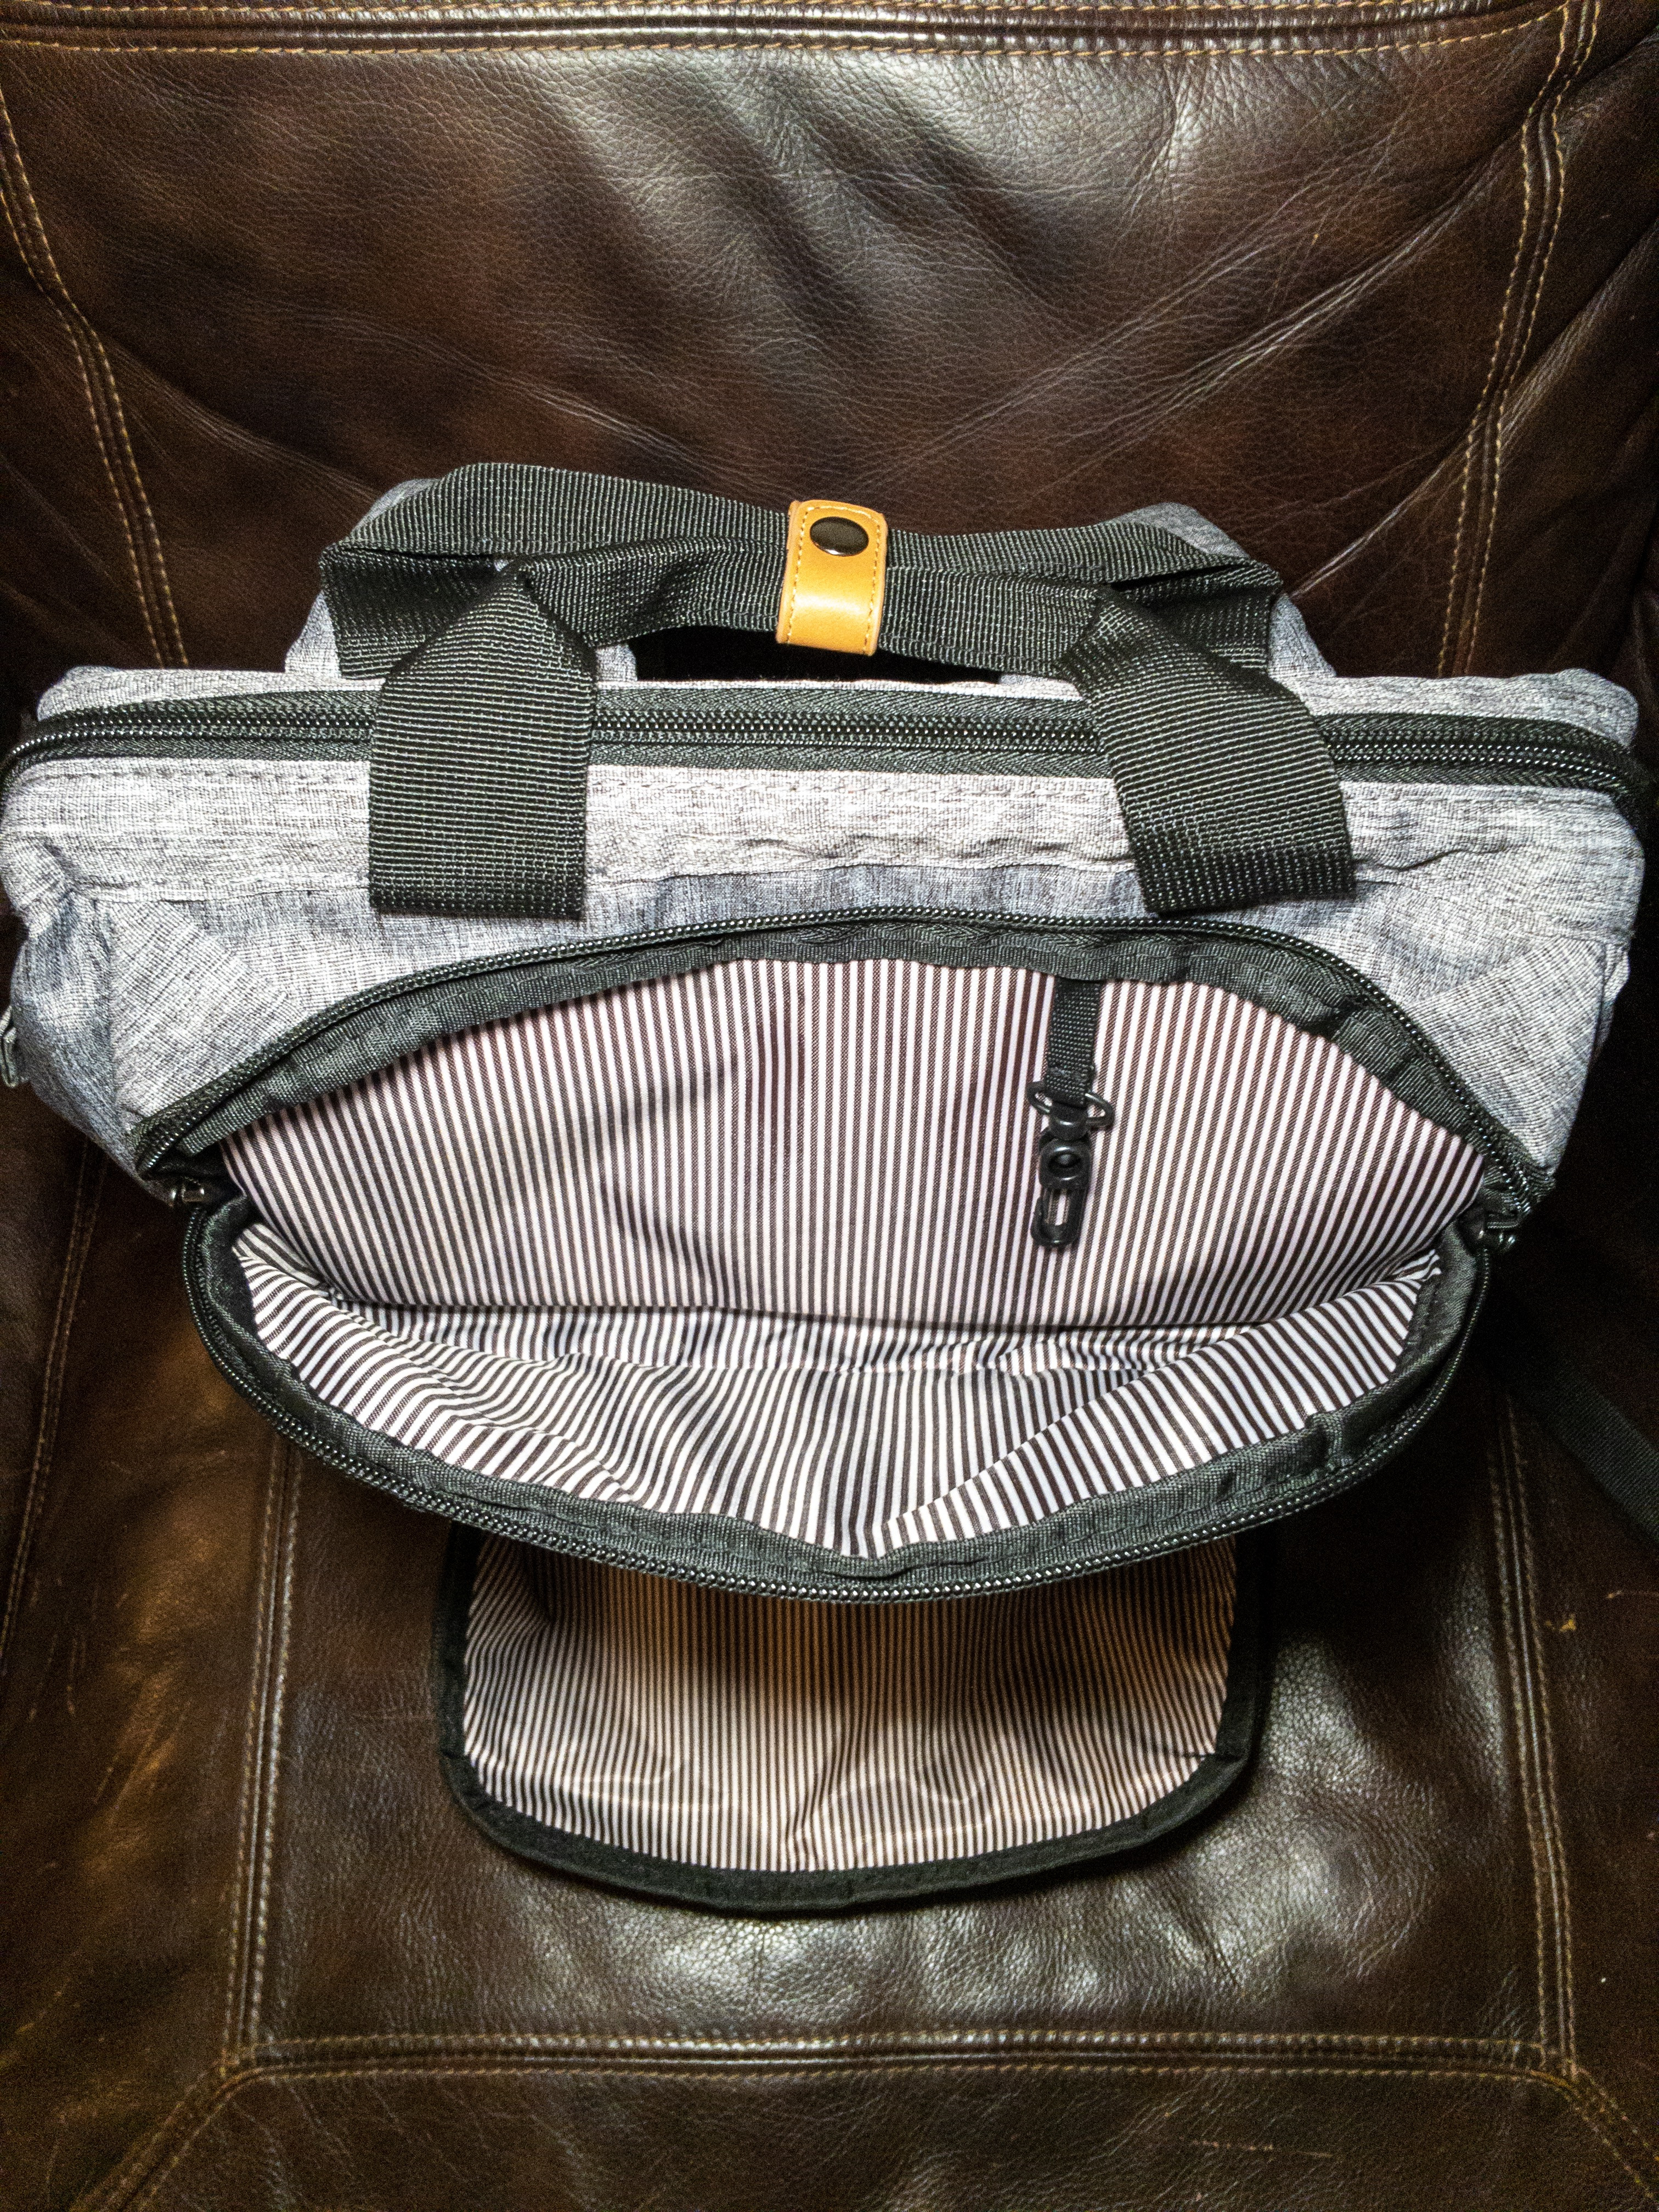 hap-tim-laptop-backpack-review-9.JPG